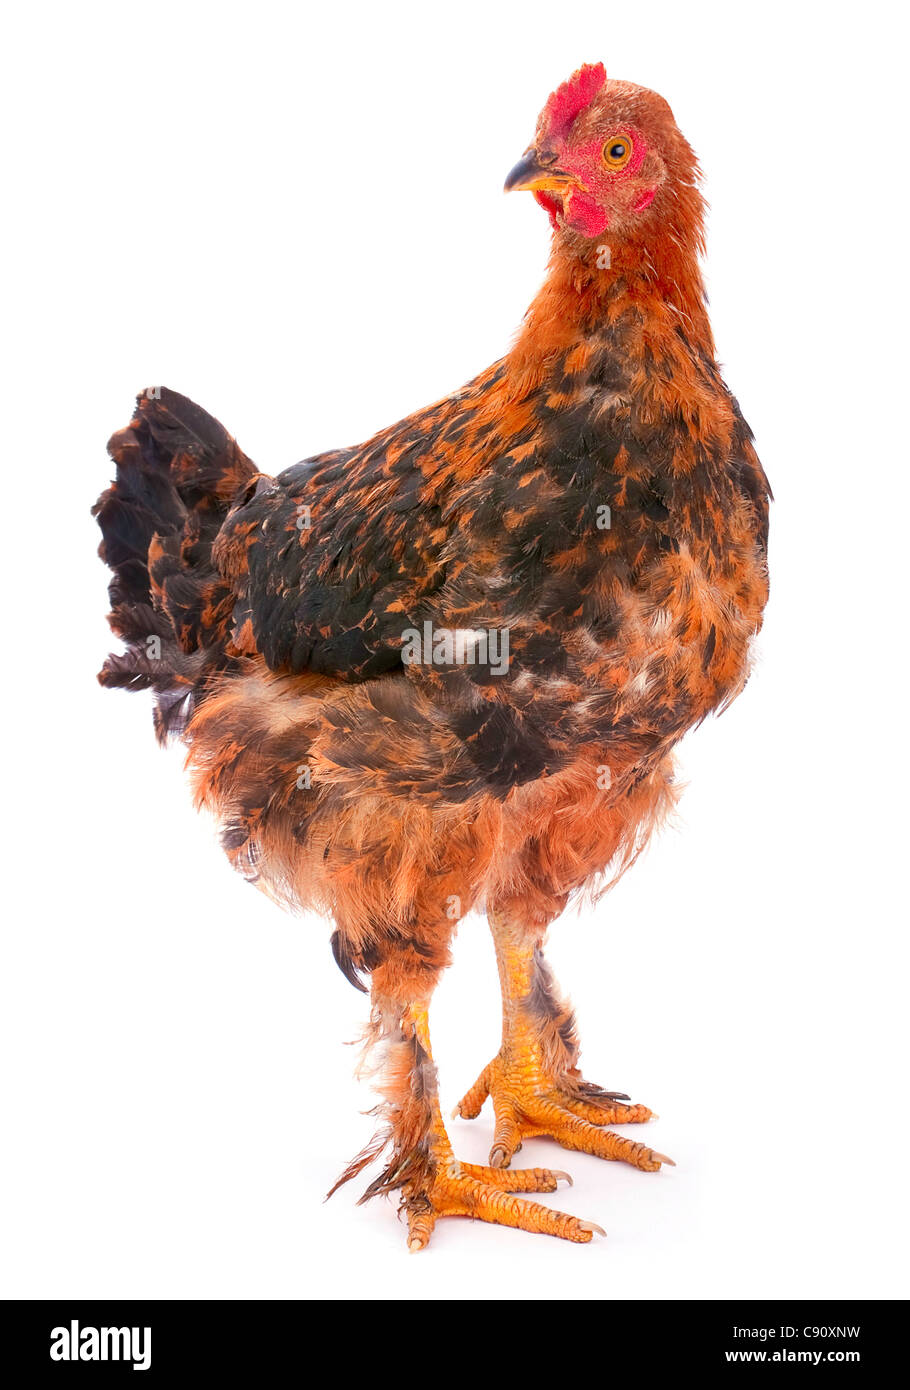 Baby rooster farm bird shot in studio on white Stock Photo